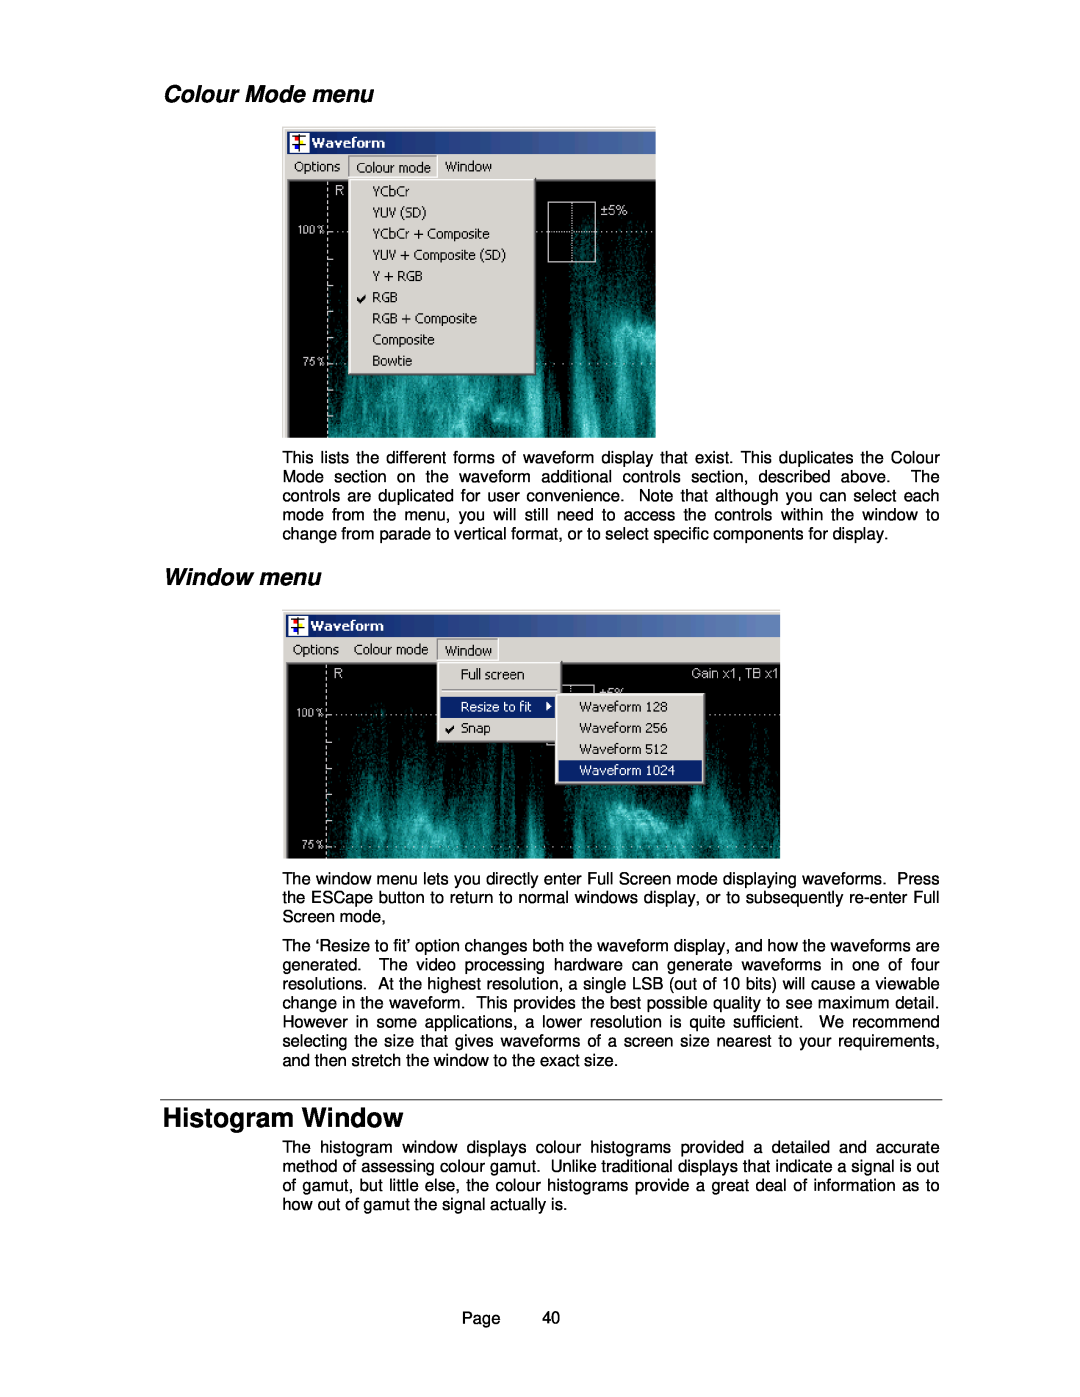 OmniTek OmniTek XR manual Histogram Window, Colour Mode menu, Window menu 